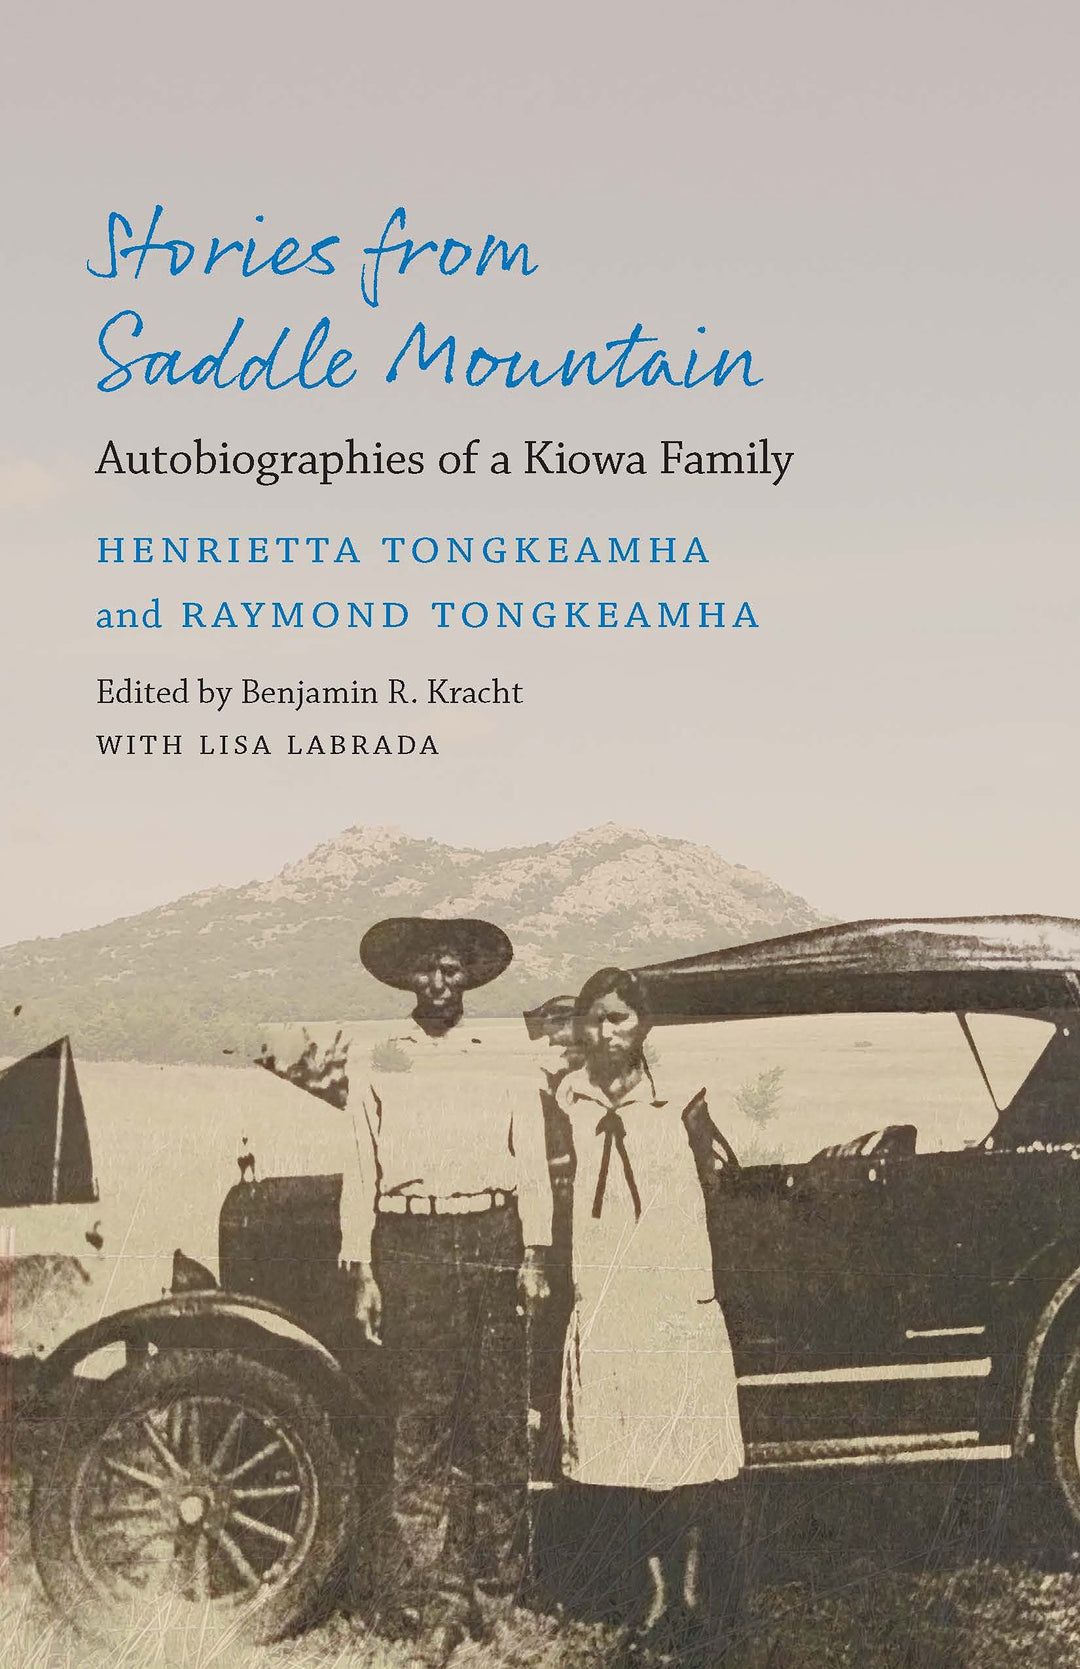 Stories from Saddle Mountain: Autobiographies of a Kiowa Family by Henrietta Tongkeamha & Raymond Tongkeamha